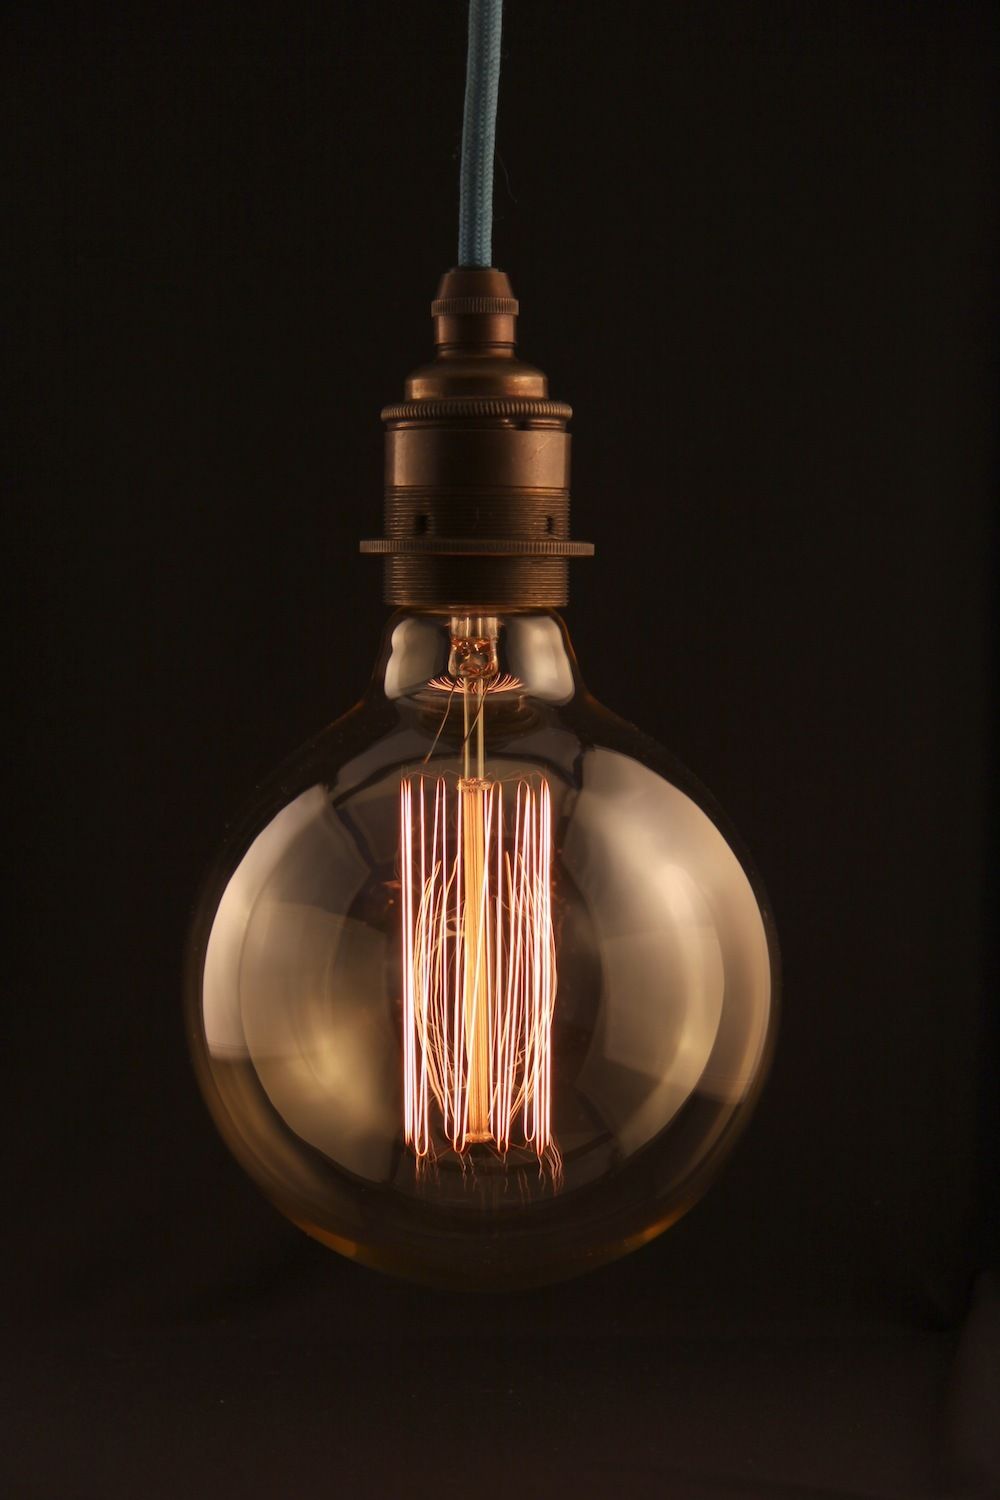 Vintage Vetro Tungsten Filament E27 Globe Edison Light Clear Bulb Lamp Incandescent Replacement 220V G125